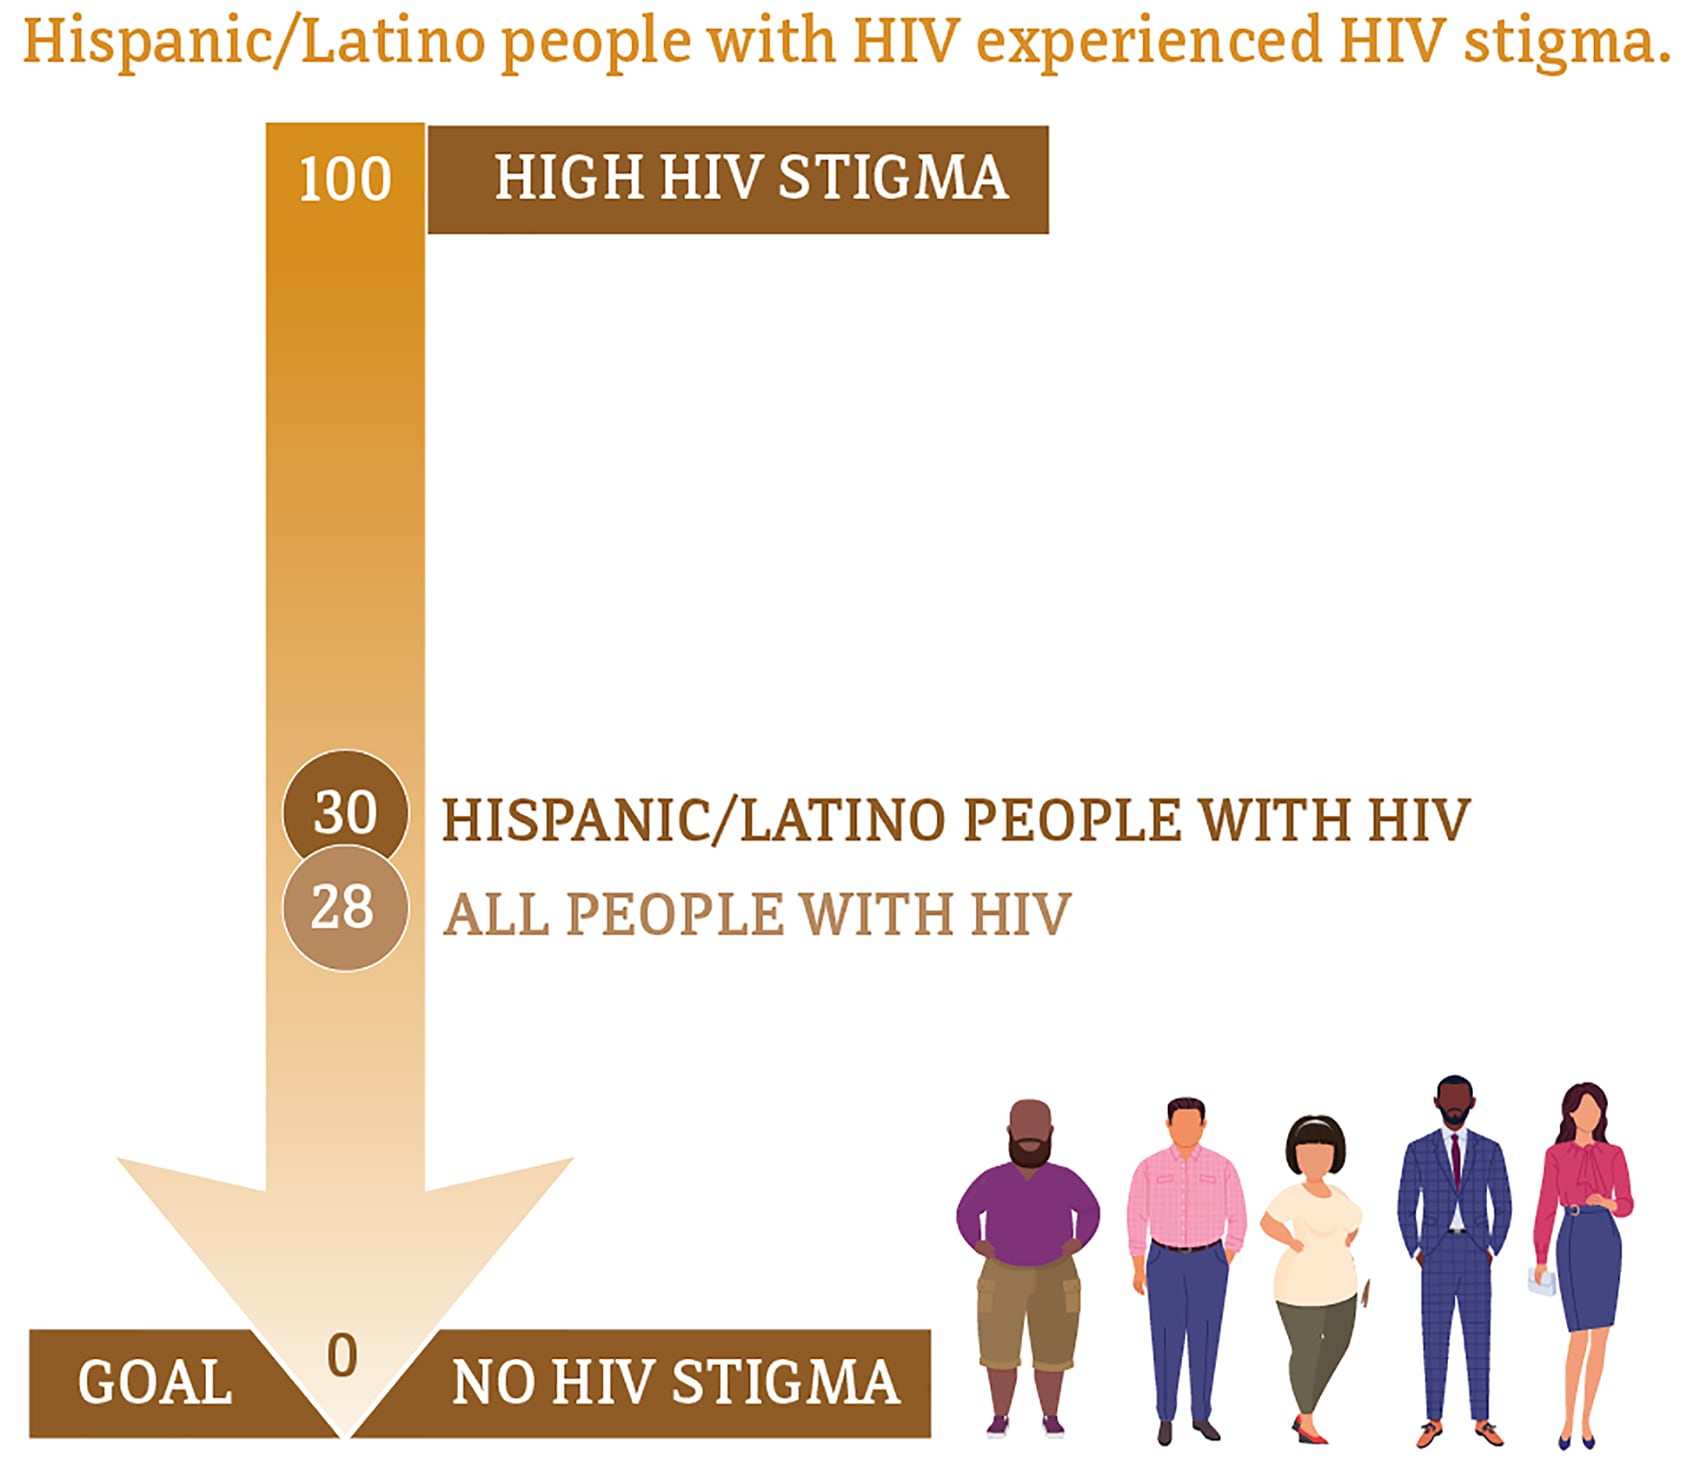 This chart shows Hispanic/Latino people experienced HIV stigma.